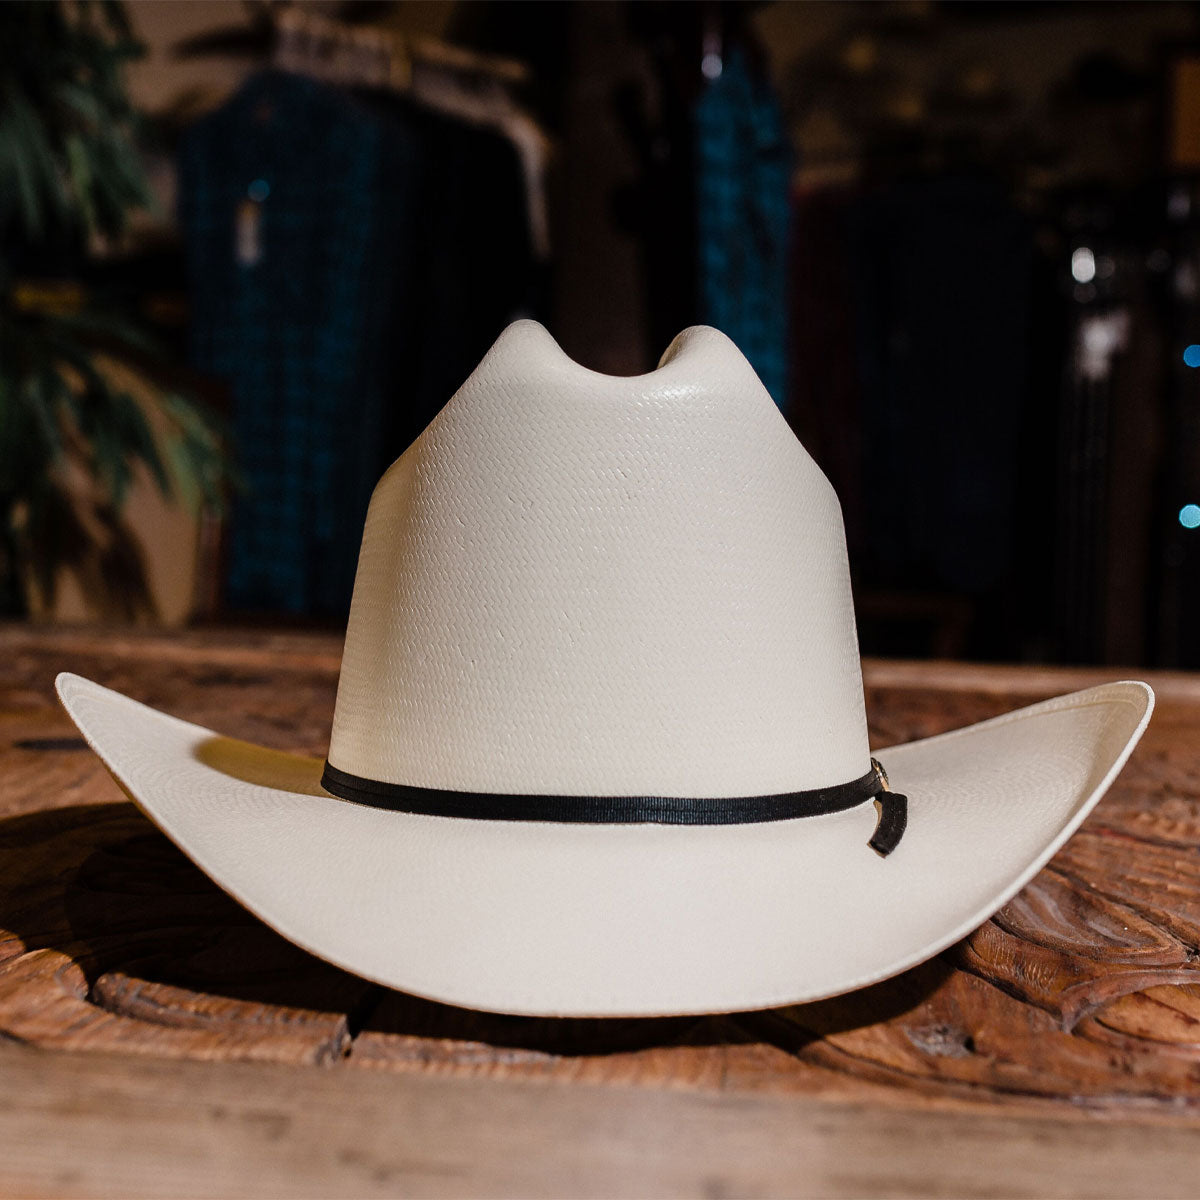 Sombrero 5Ox Niño - West Point Hats - Sombreros West Point: Sombreros  Vaqueros, Texanas y Sombreros WestPoint